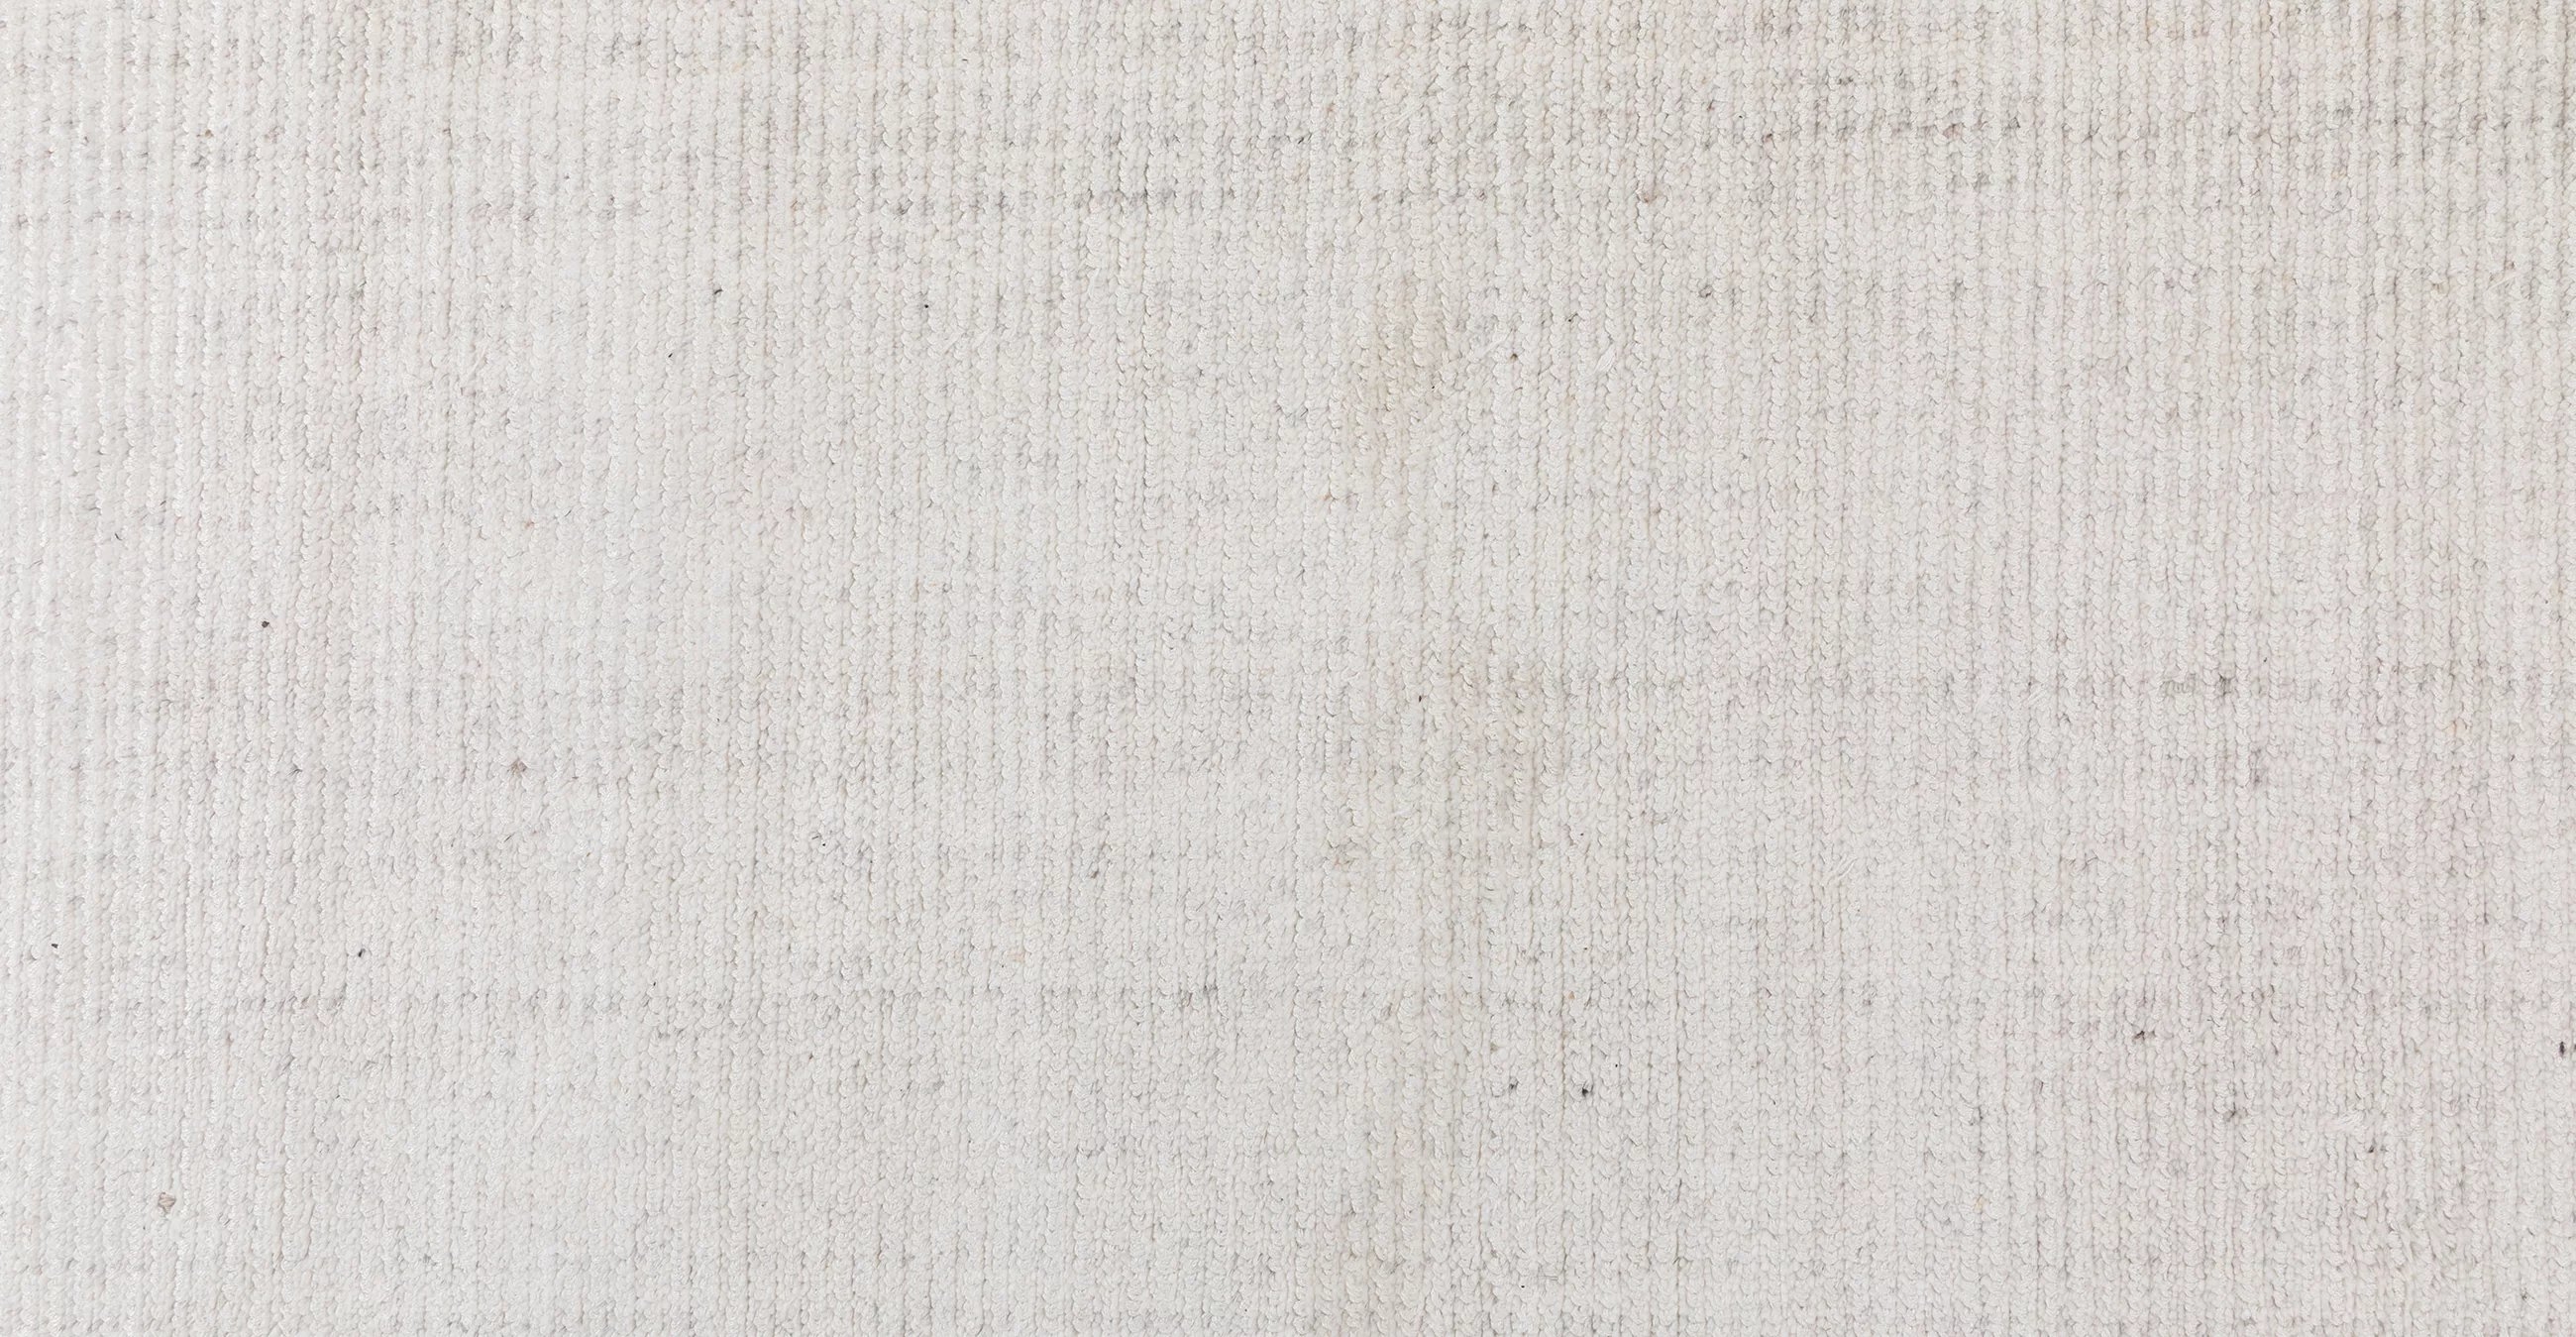 Suto Powder White Rug 8 x 10 - Image 4